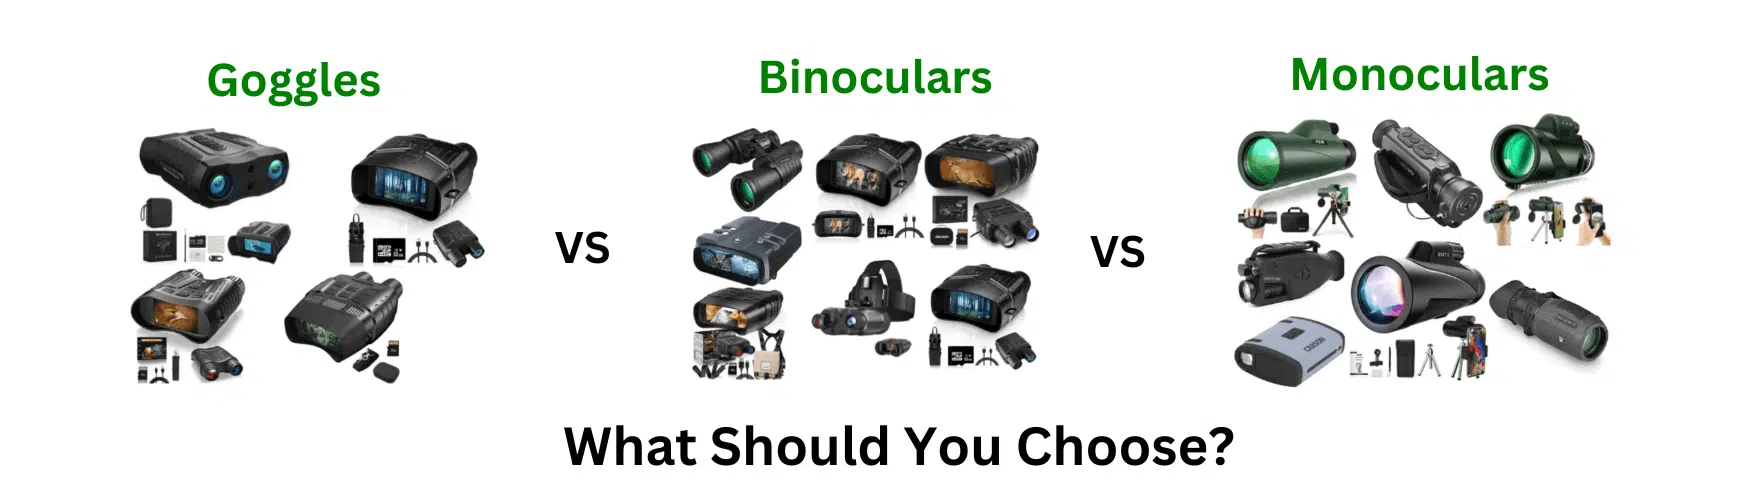 goggles-vs-binoculars-vs-monoculars-images